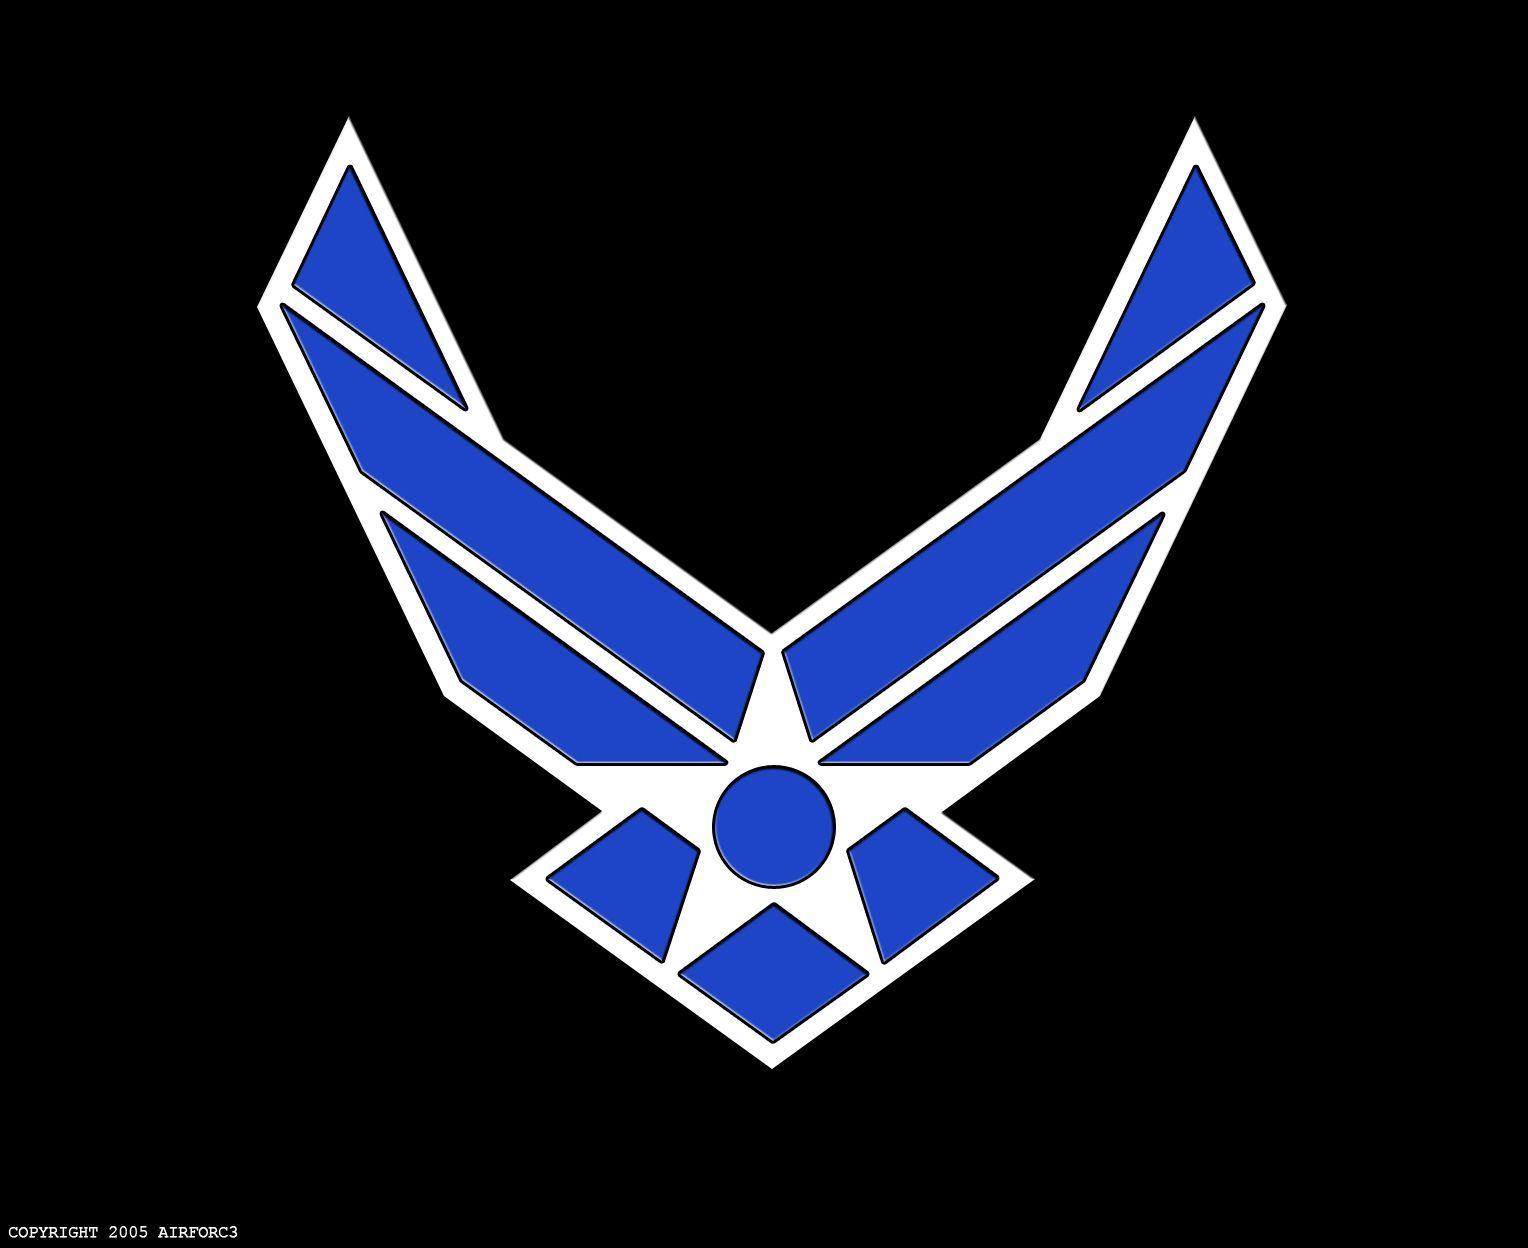 Air Force Logo Wallpapers - Wallpaper Cave
 Usaf Logo Wallpaper Hd